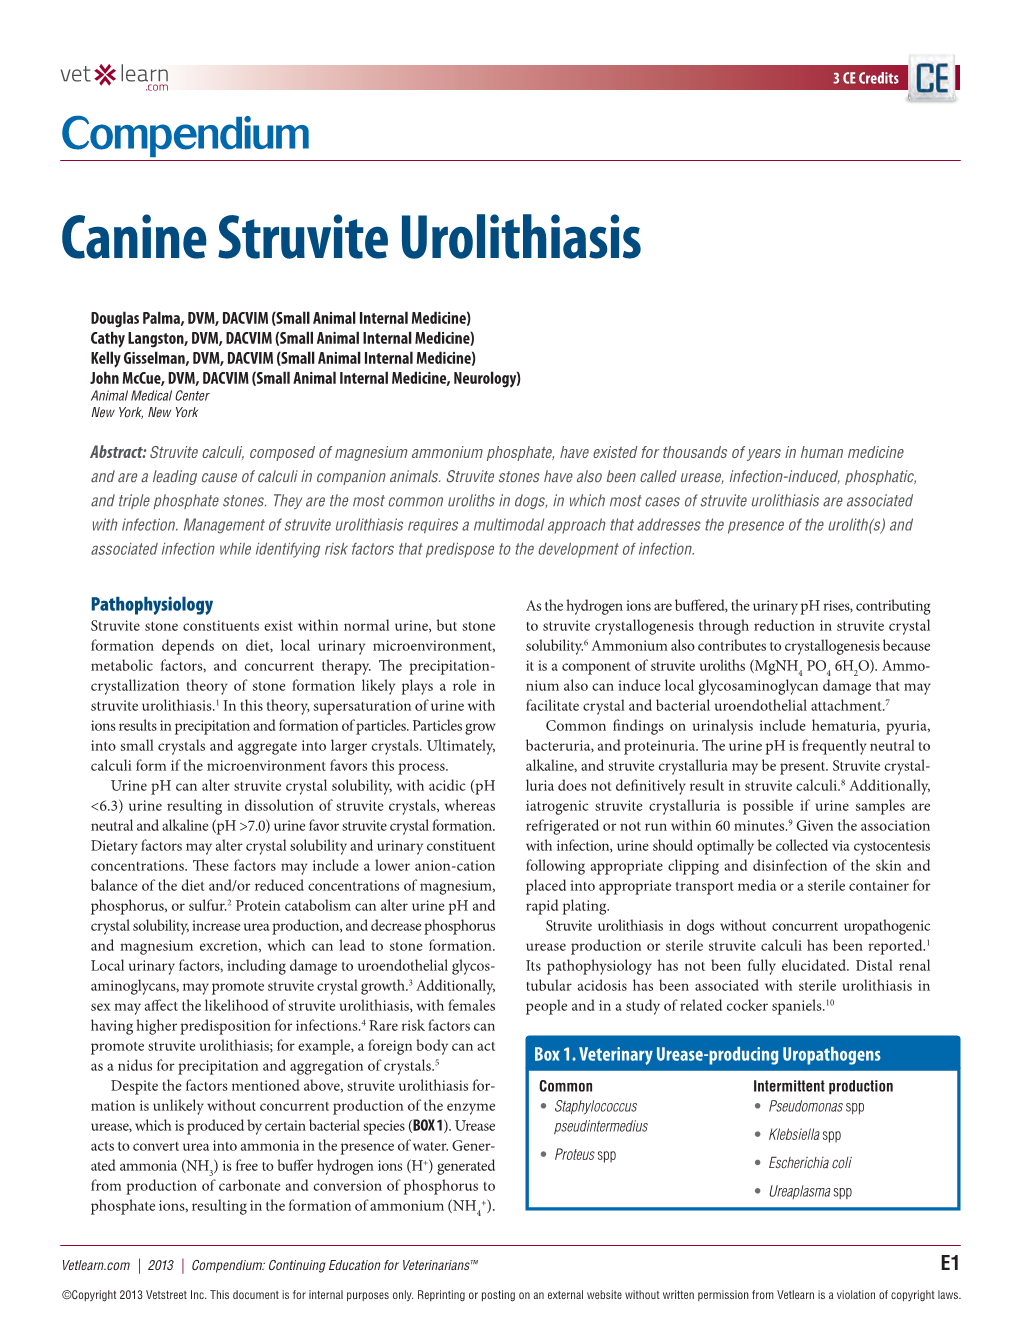 Canine Struvite Urolithiasis